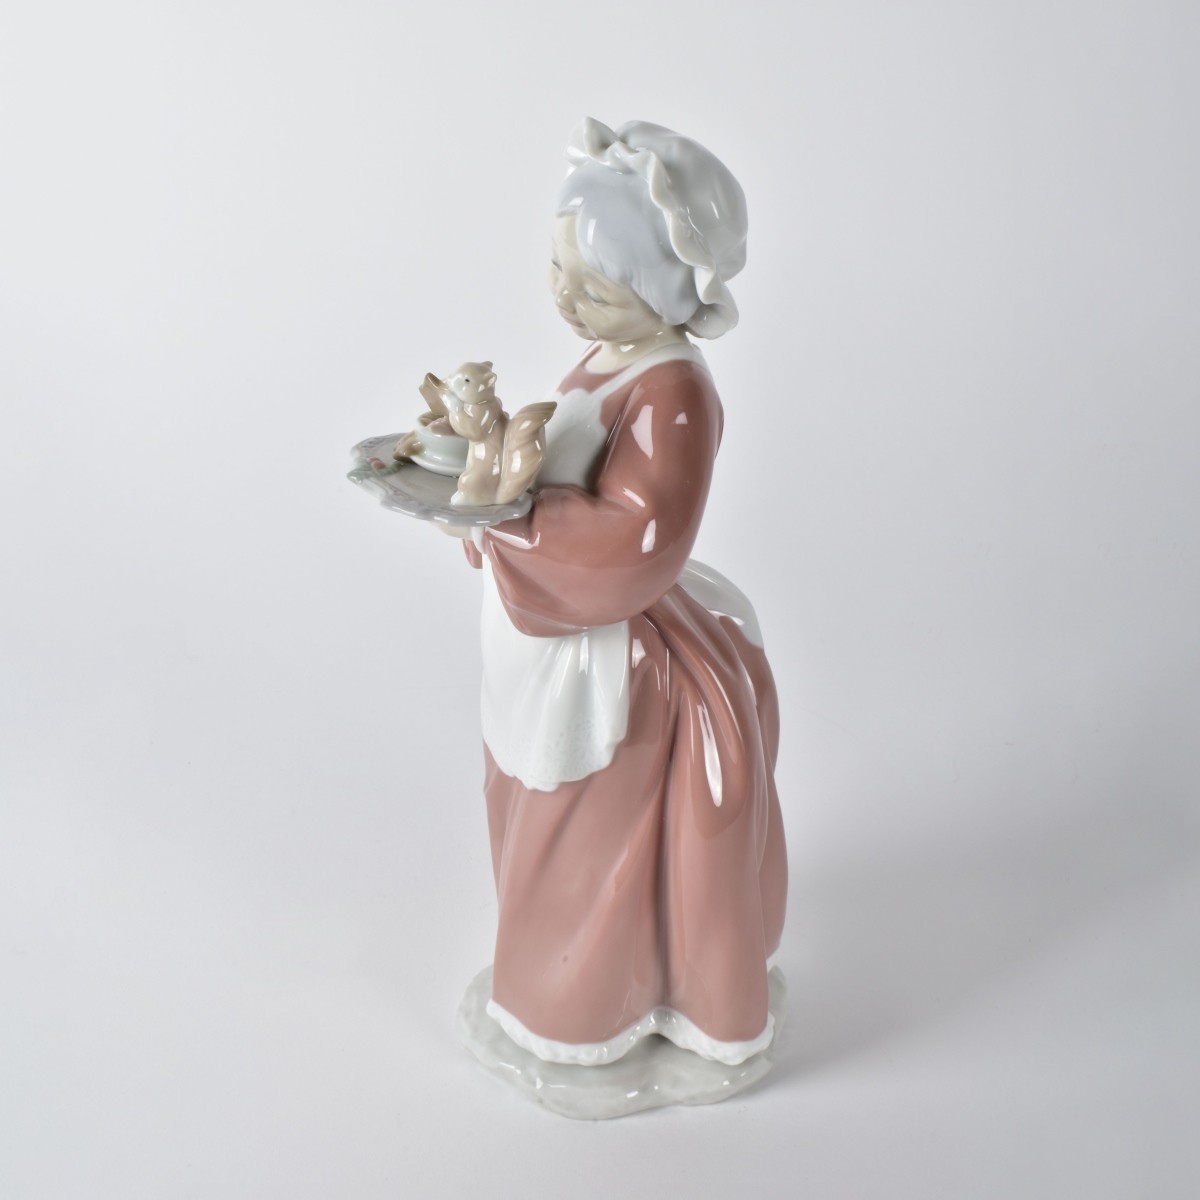 Lladro "Mrs. Santa Claus" Figurine